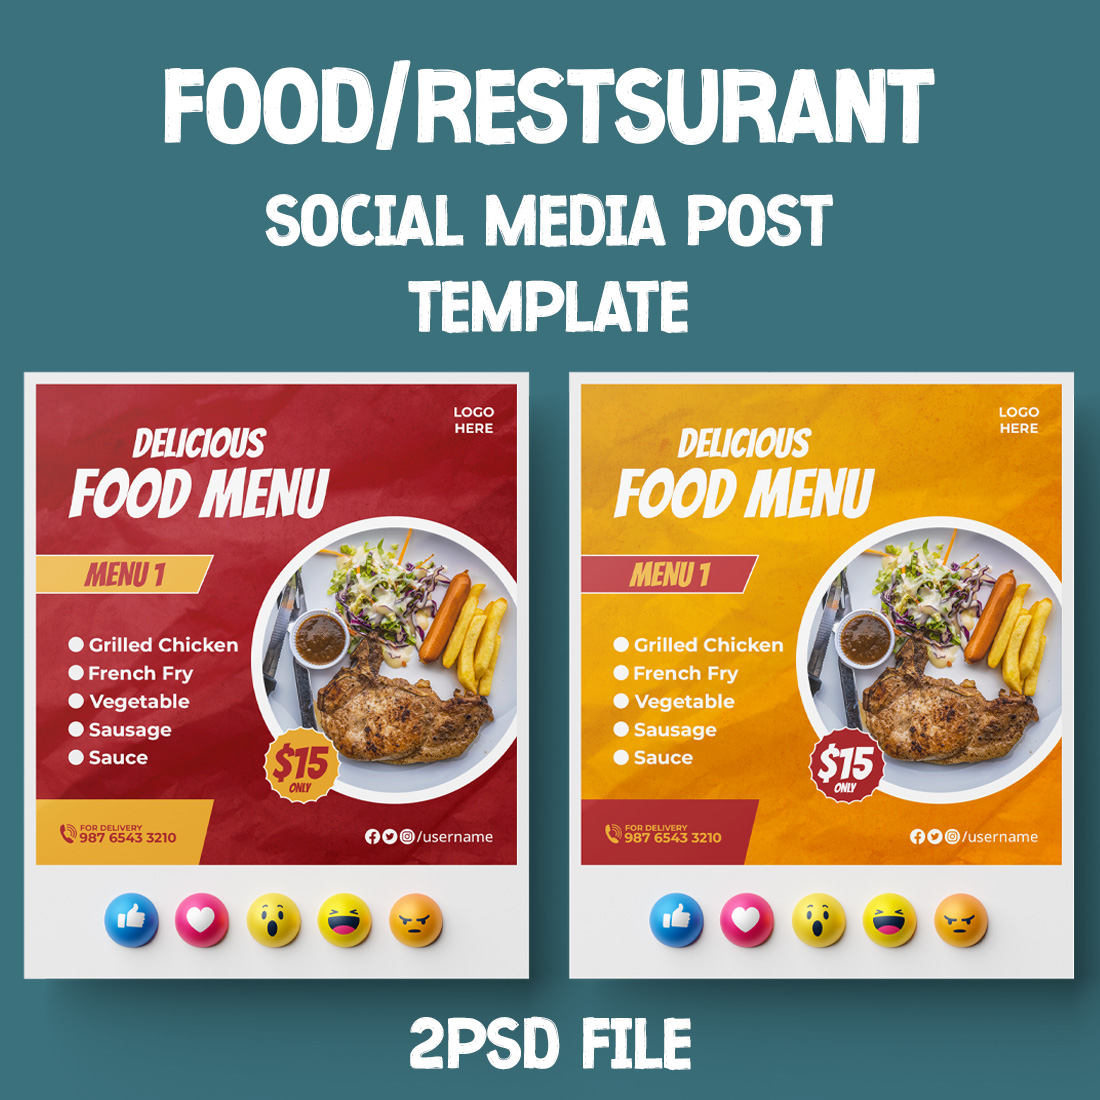 2 Delicious Food Menu Restaurant Social Media Banner Templates cover image.